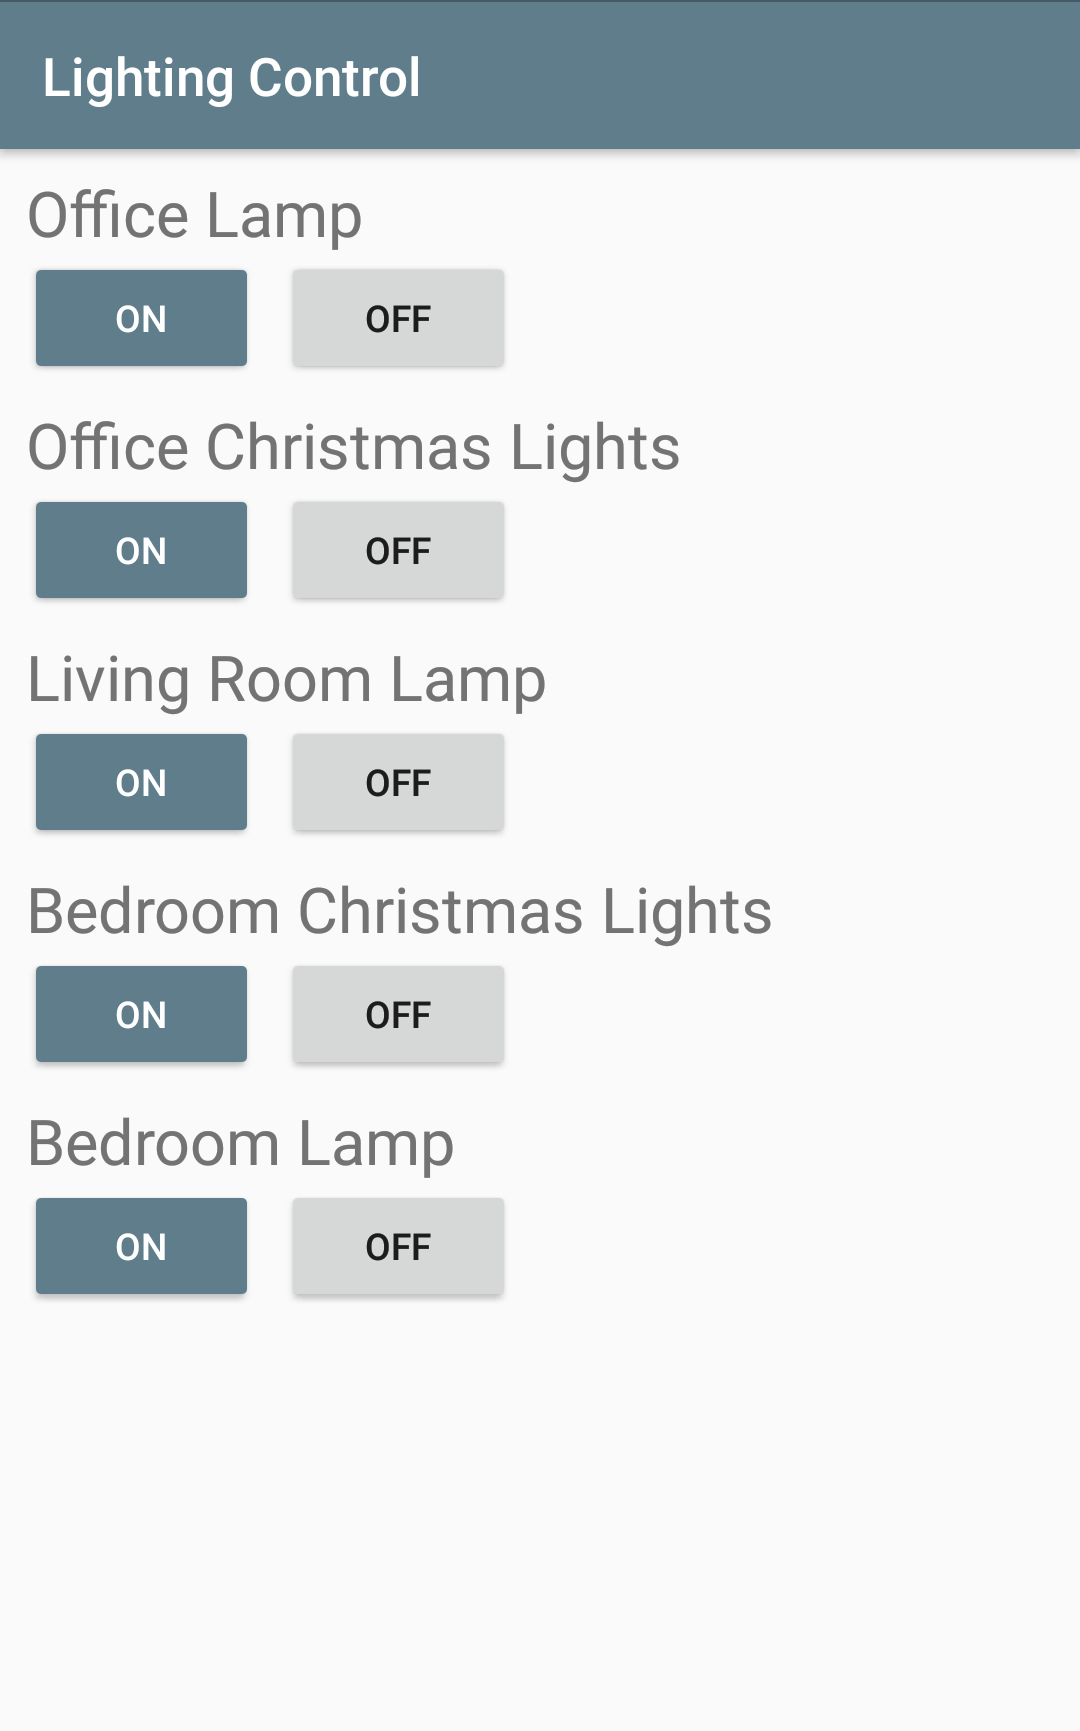 Lighting Control App Screenshot